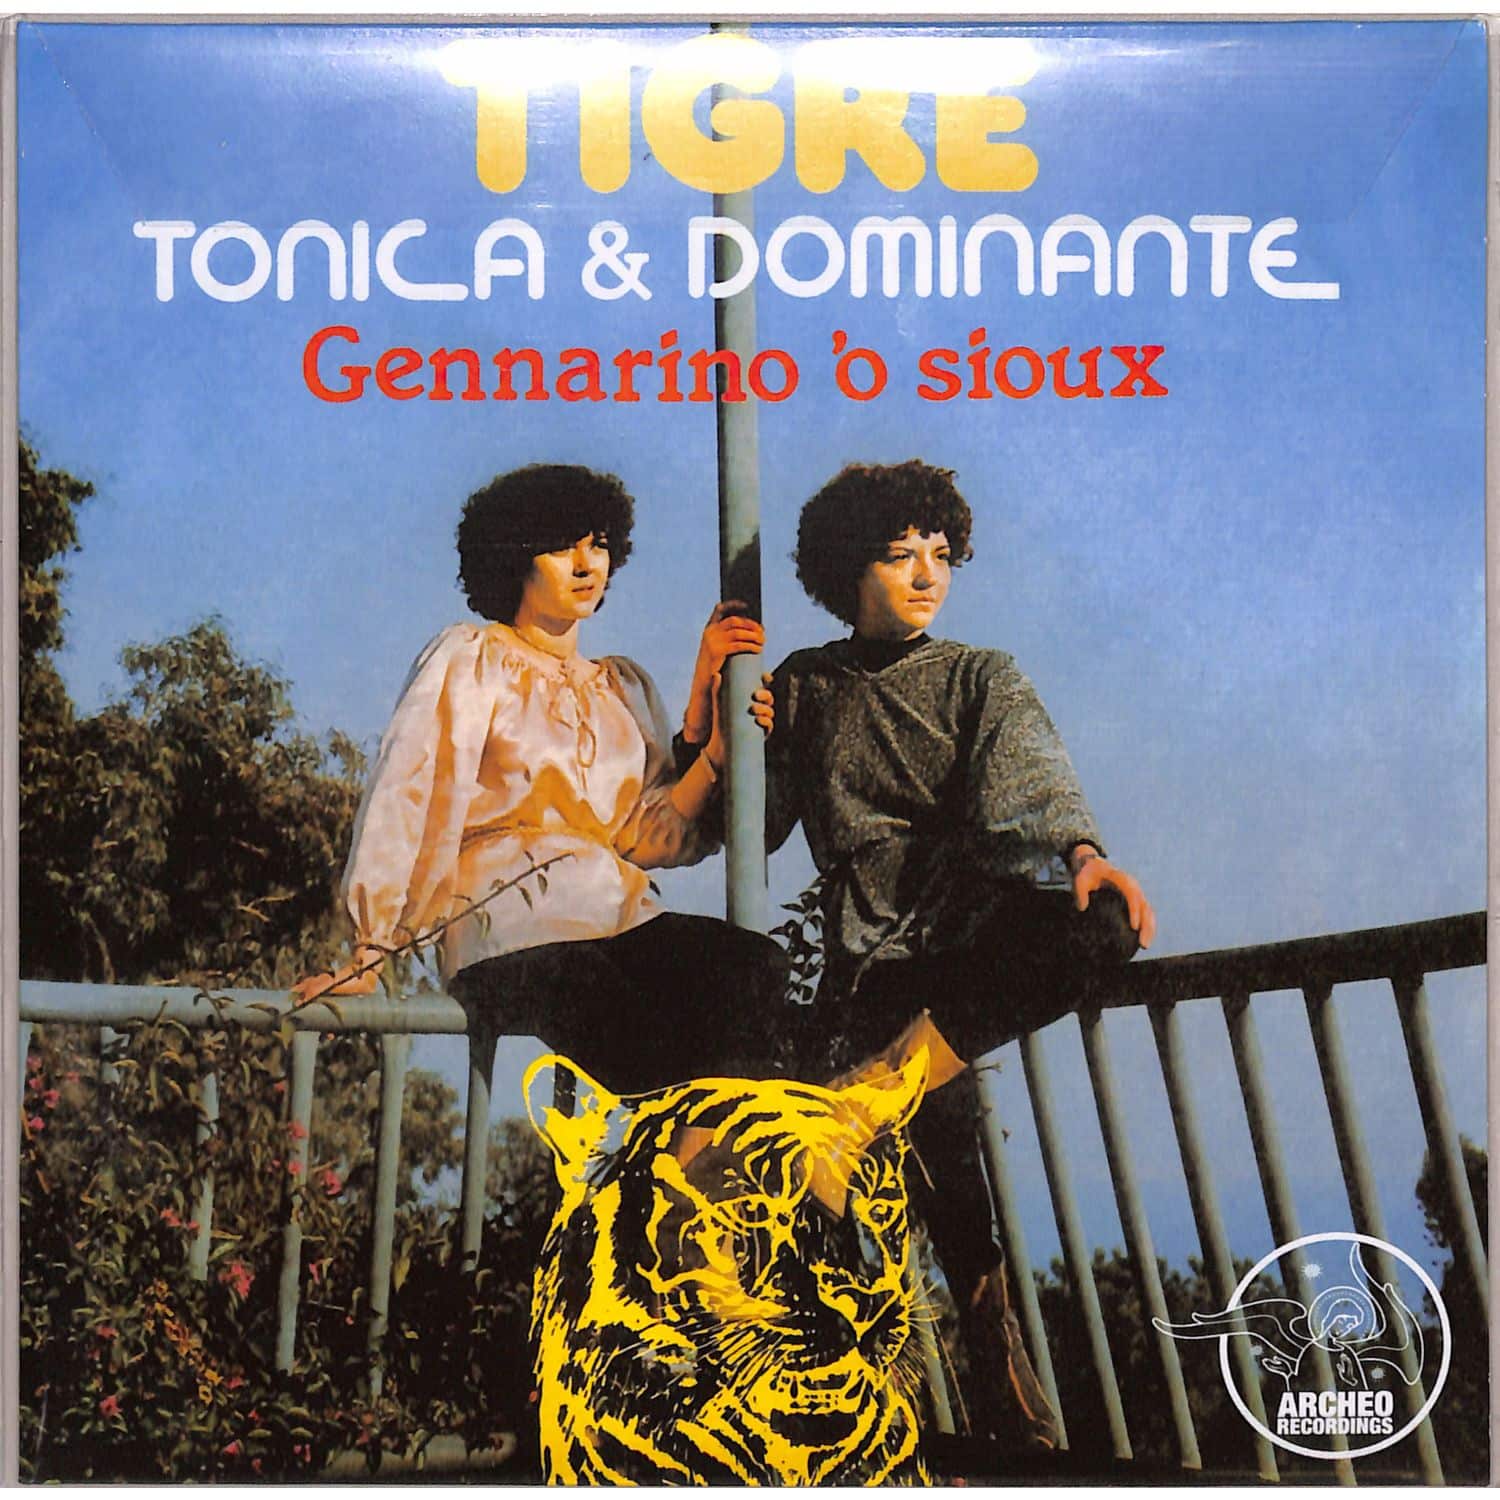 Tonica & Dominante - TIGRE / GENNARINO O SIOUX 